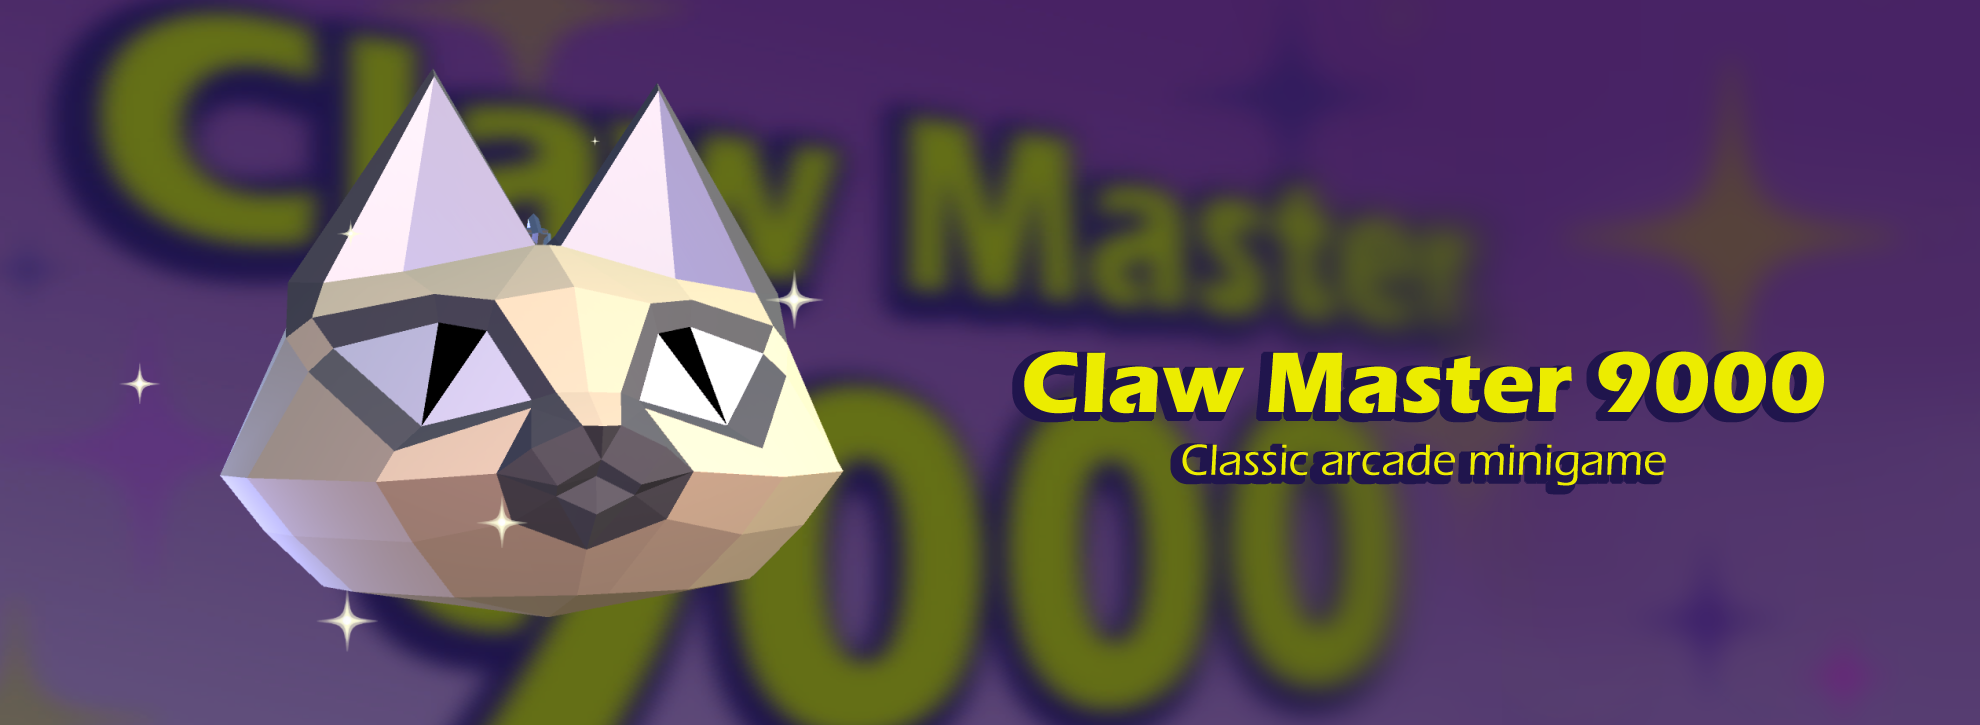 Claw Master 9000